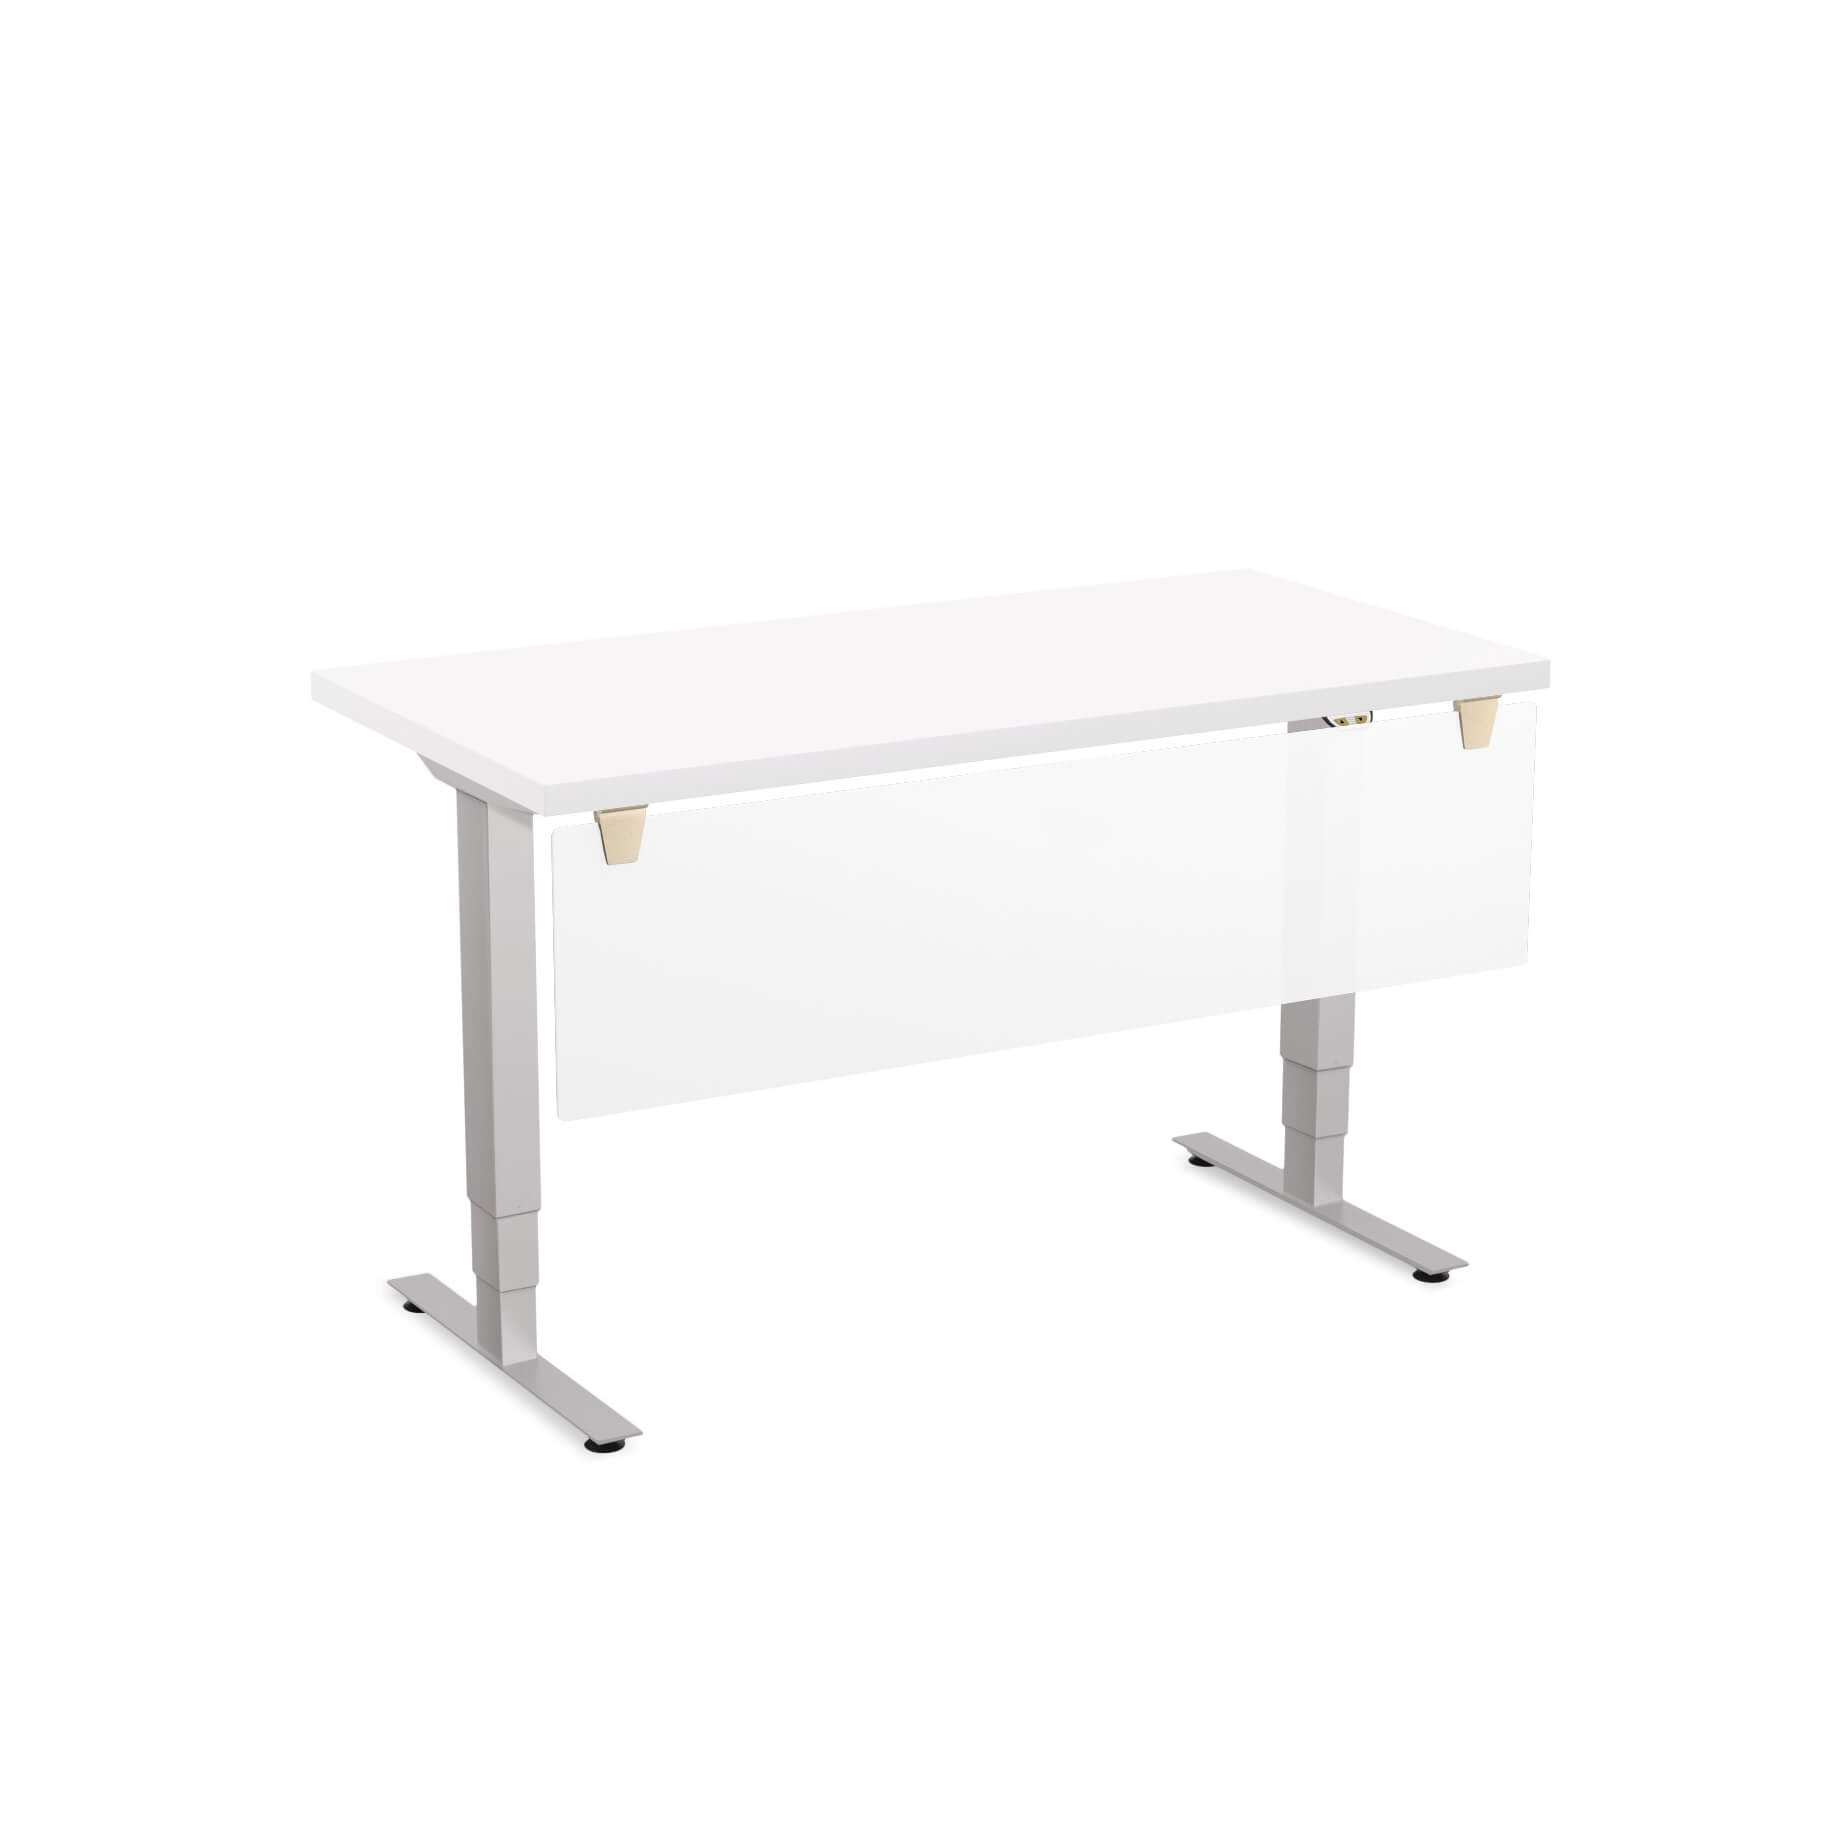 sit-stand-desk-height-adjustable-table-1-2.jpg